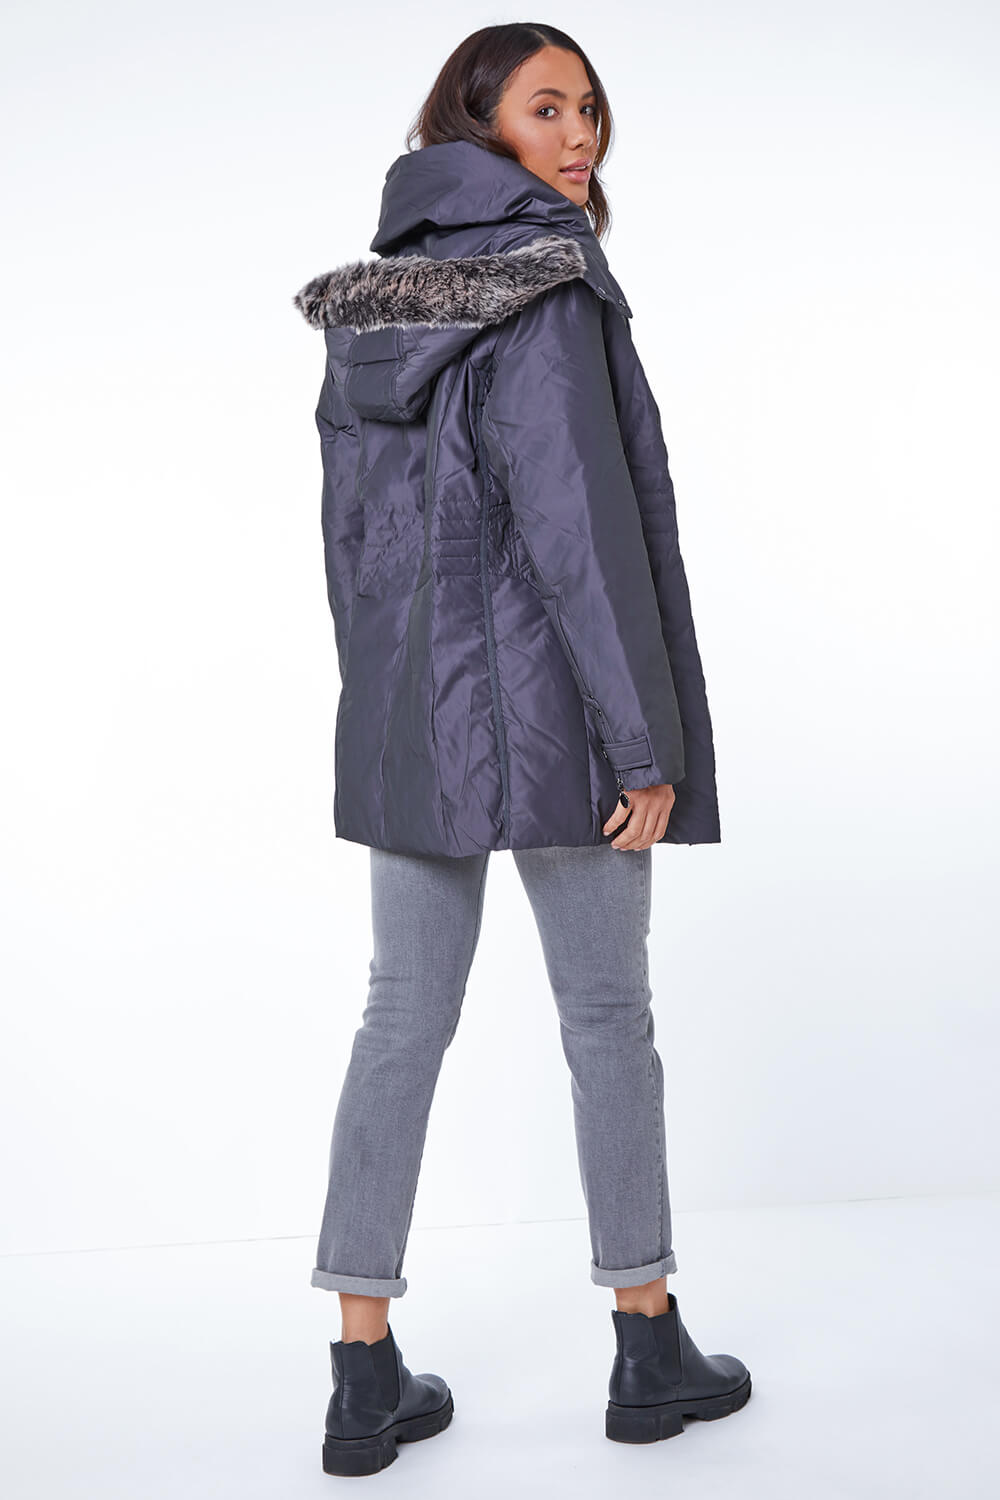 Charcoal Faux Fur Trim Hooded Coat, Image 3 of 5